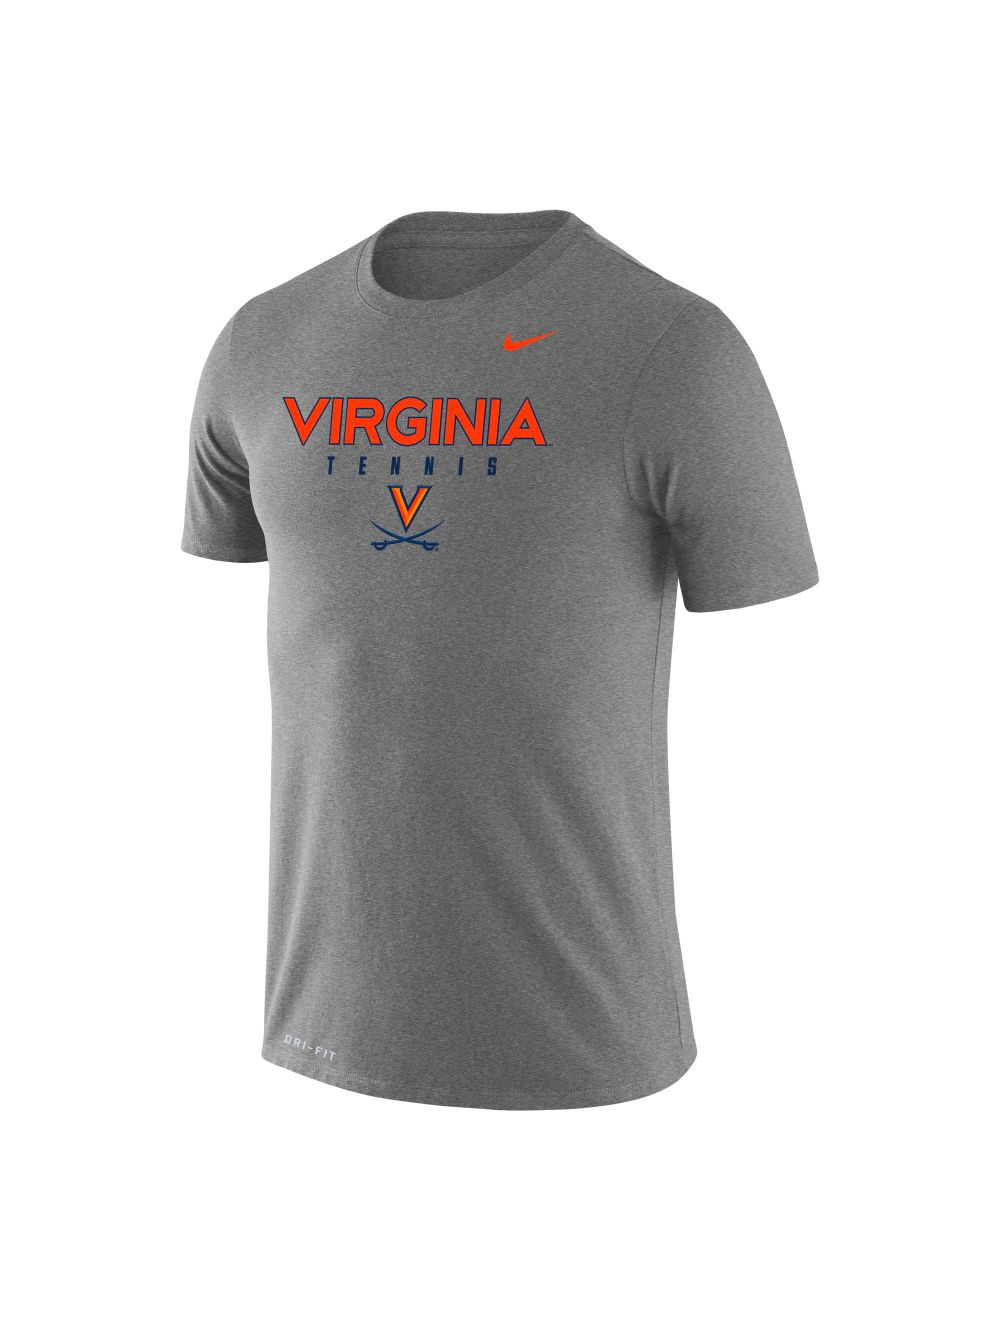 Virginia Tech Hokies tennis jersey